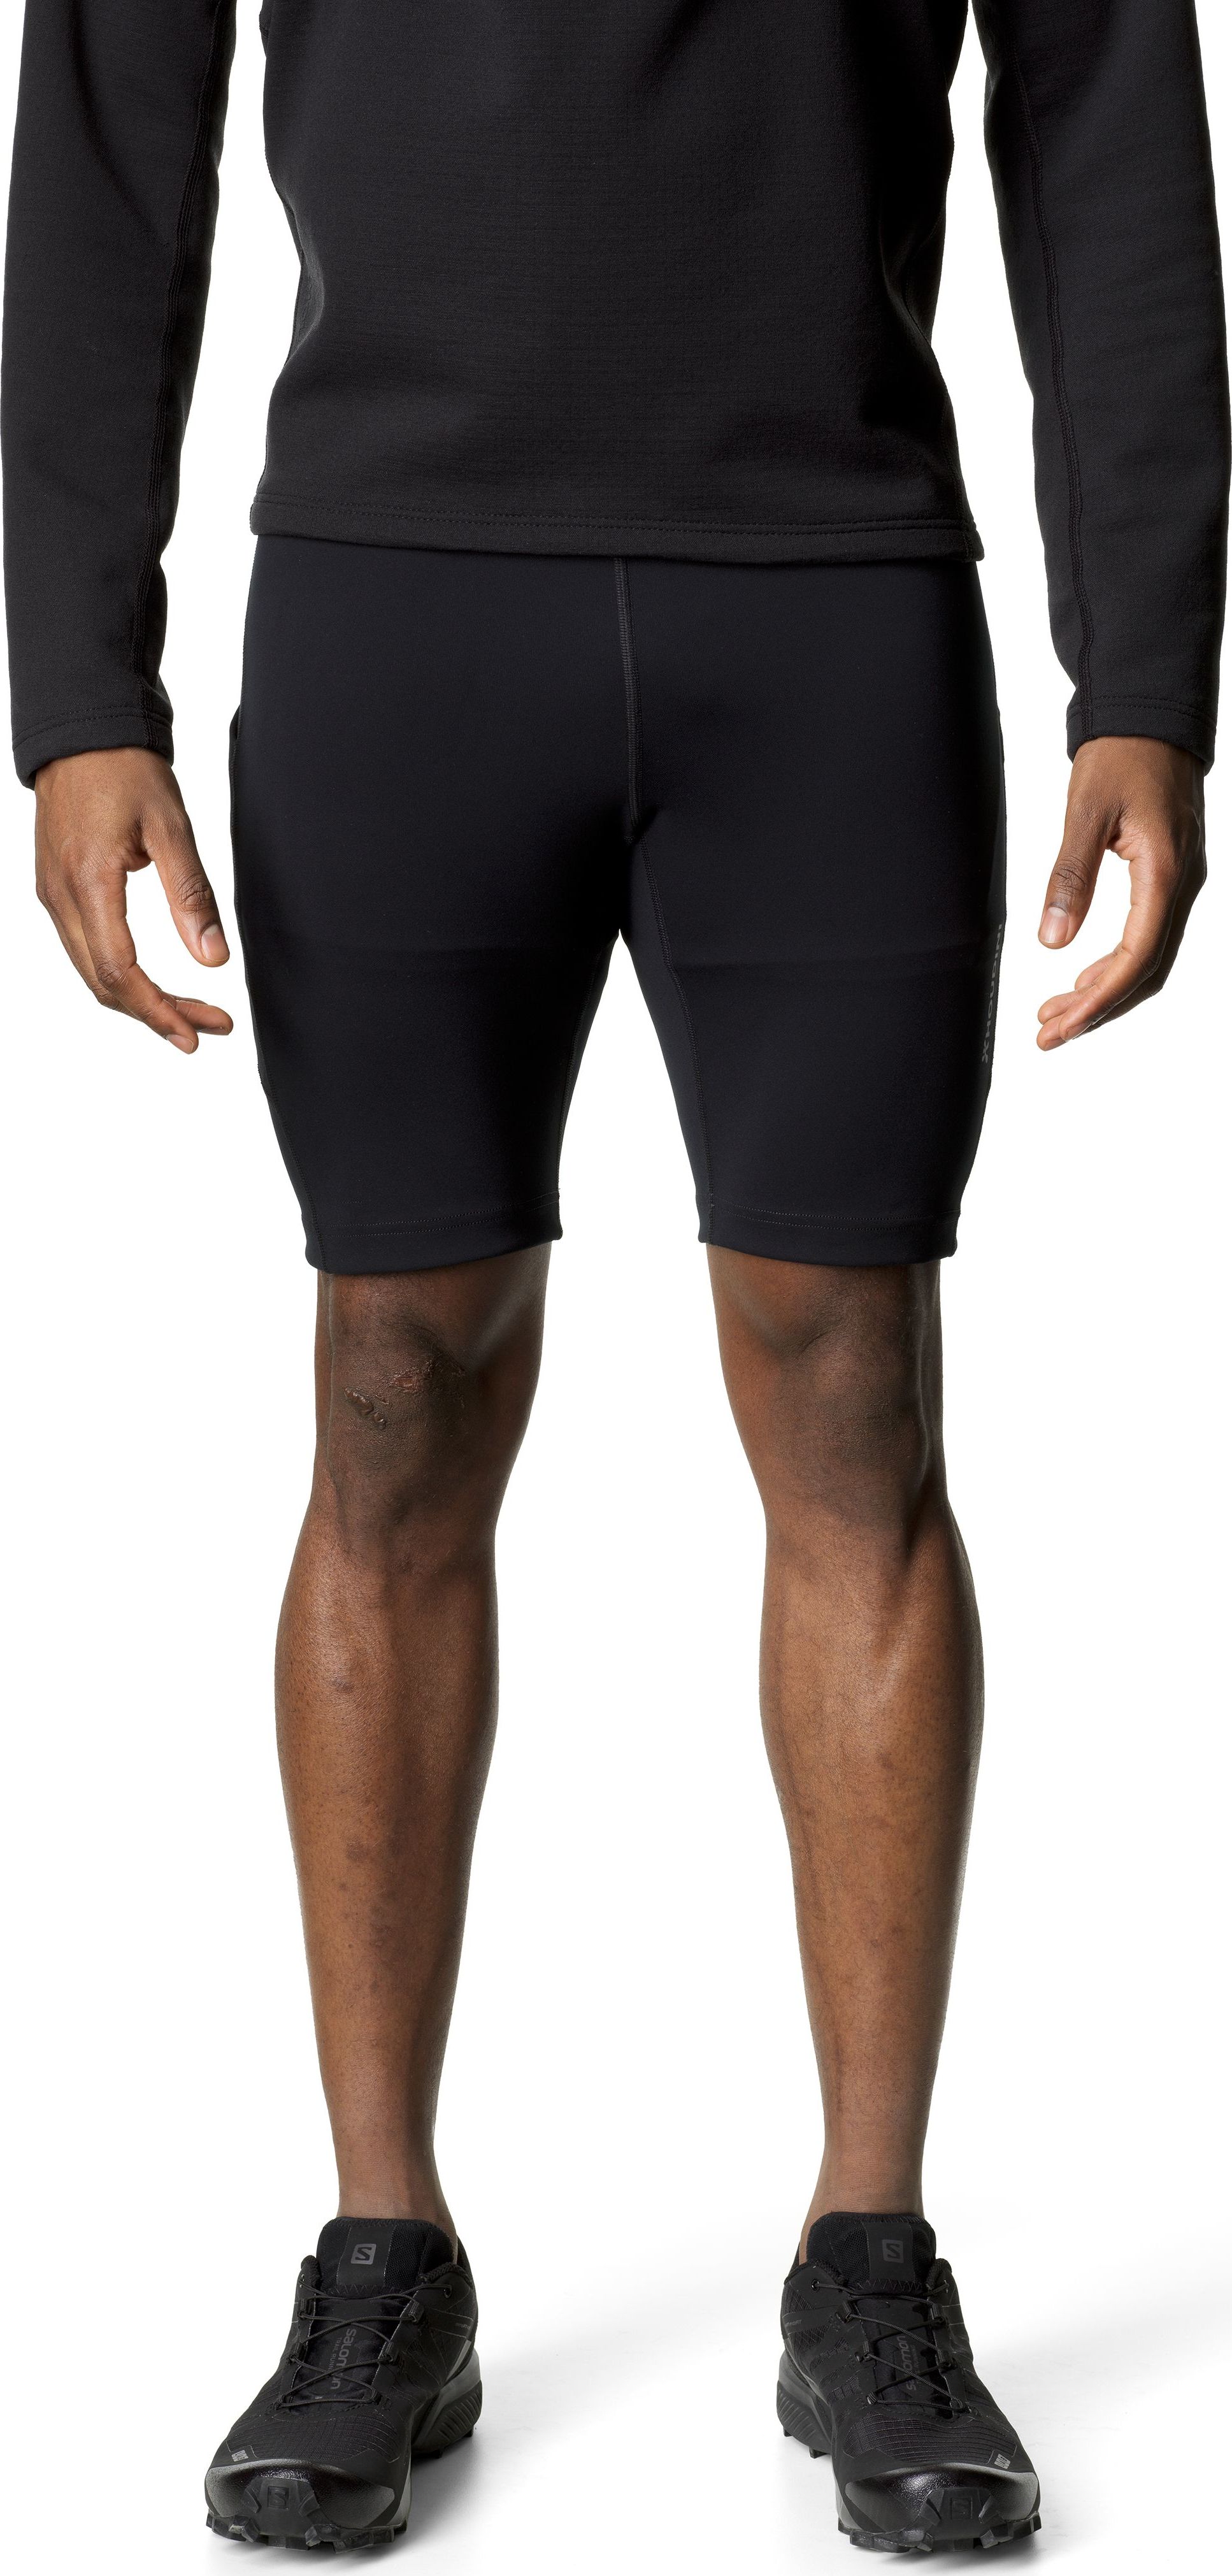 Men's compression running shorts